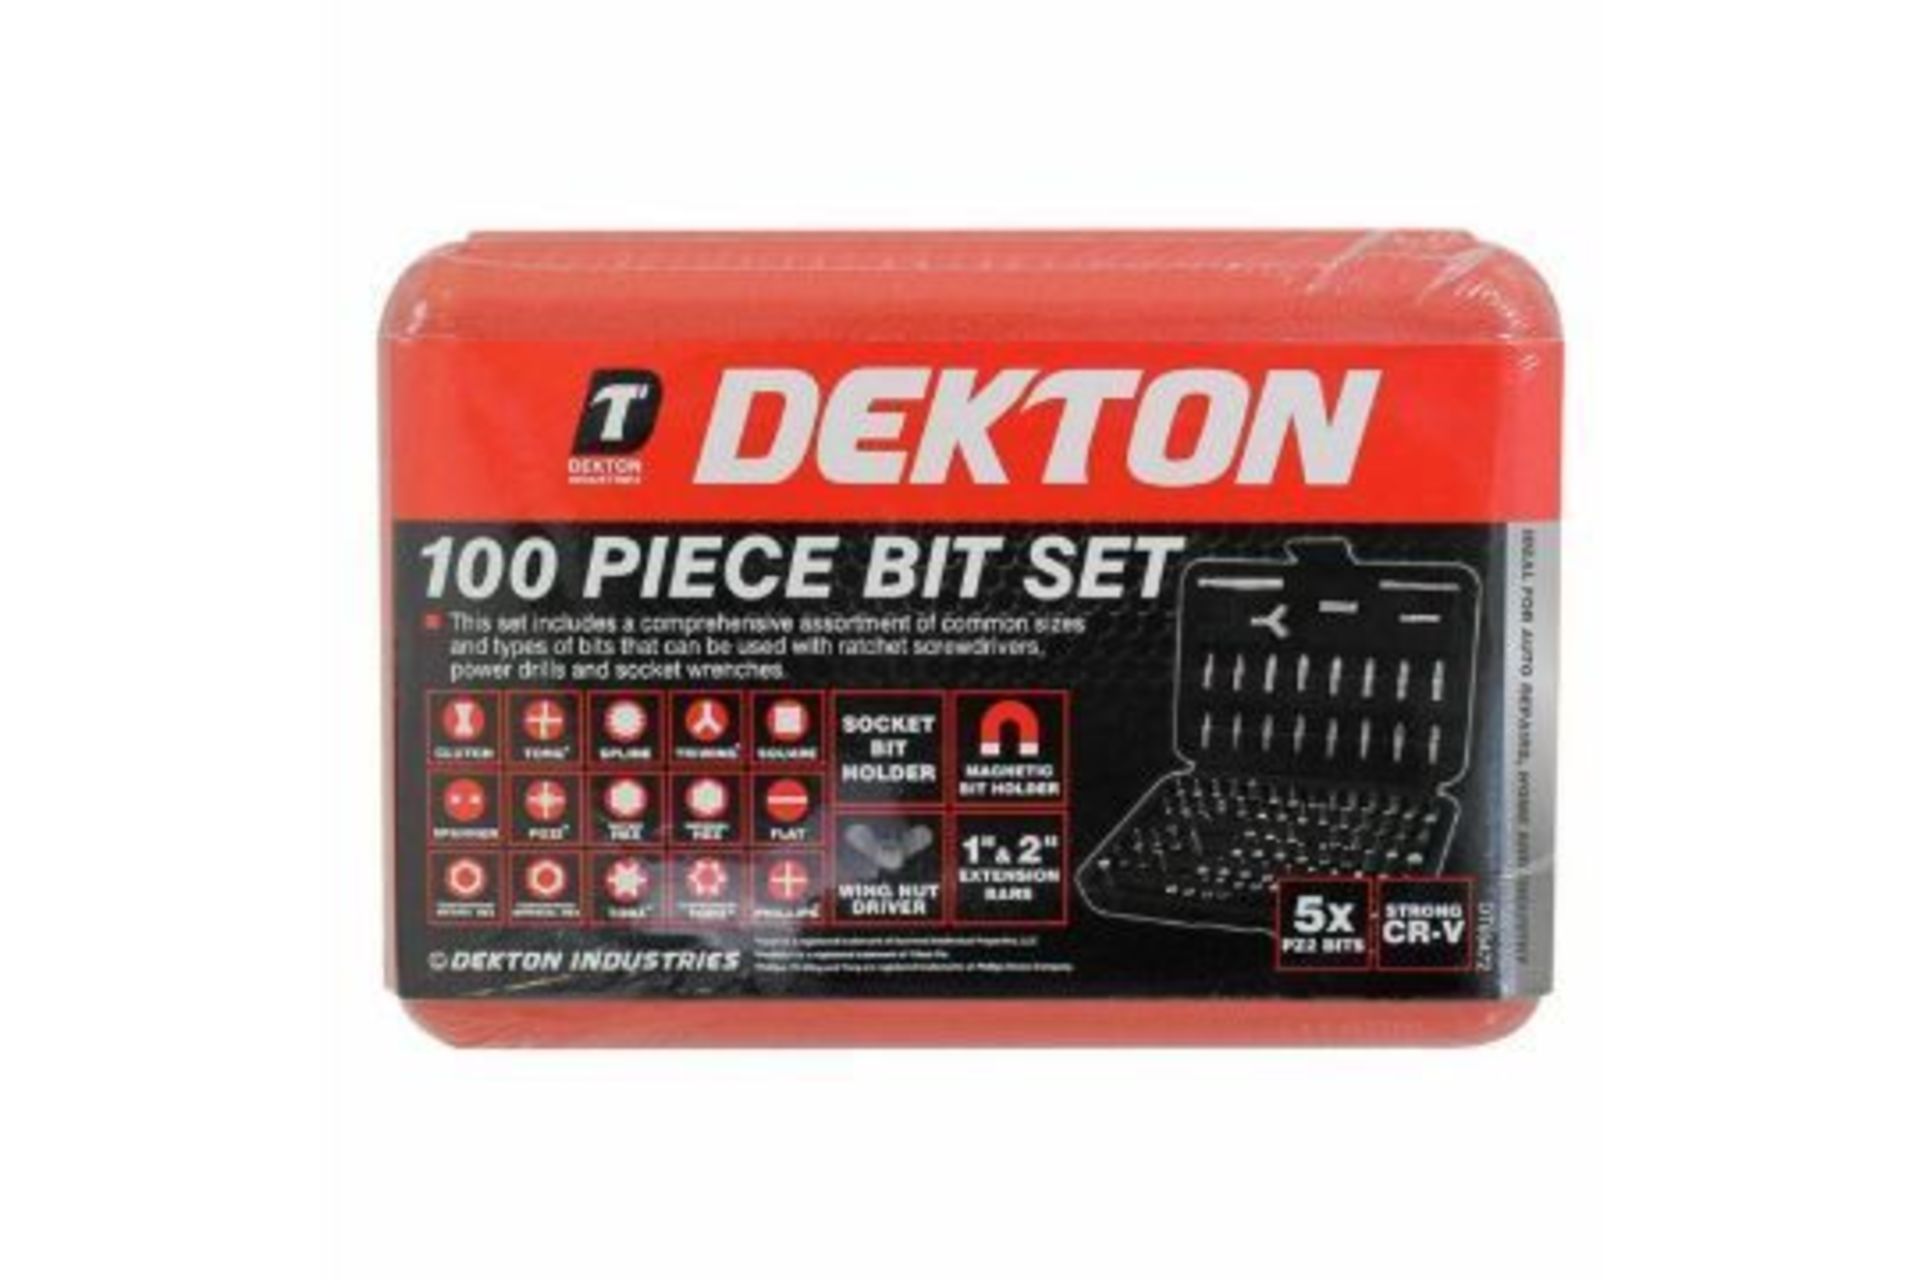 New Dekton 100pc Bit Set - Image 2 of 2